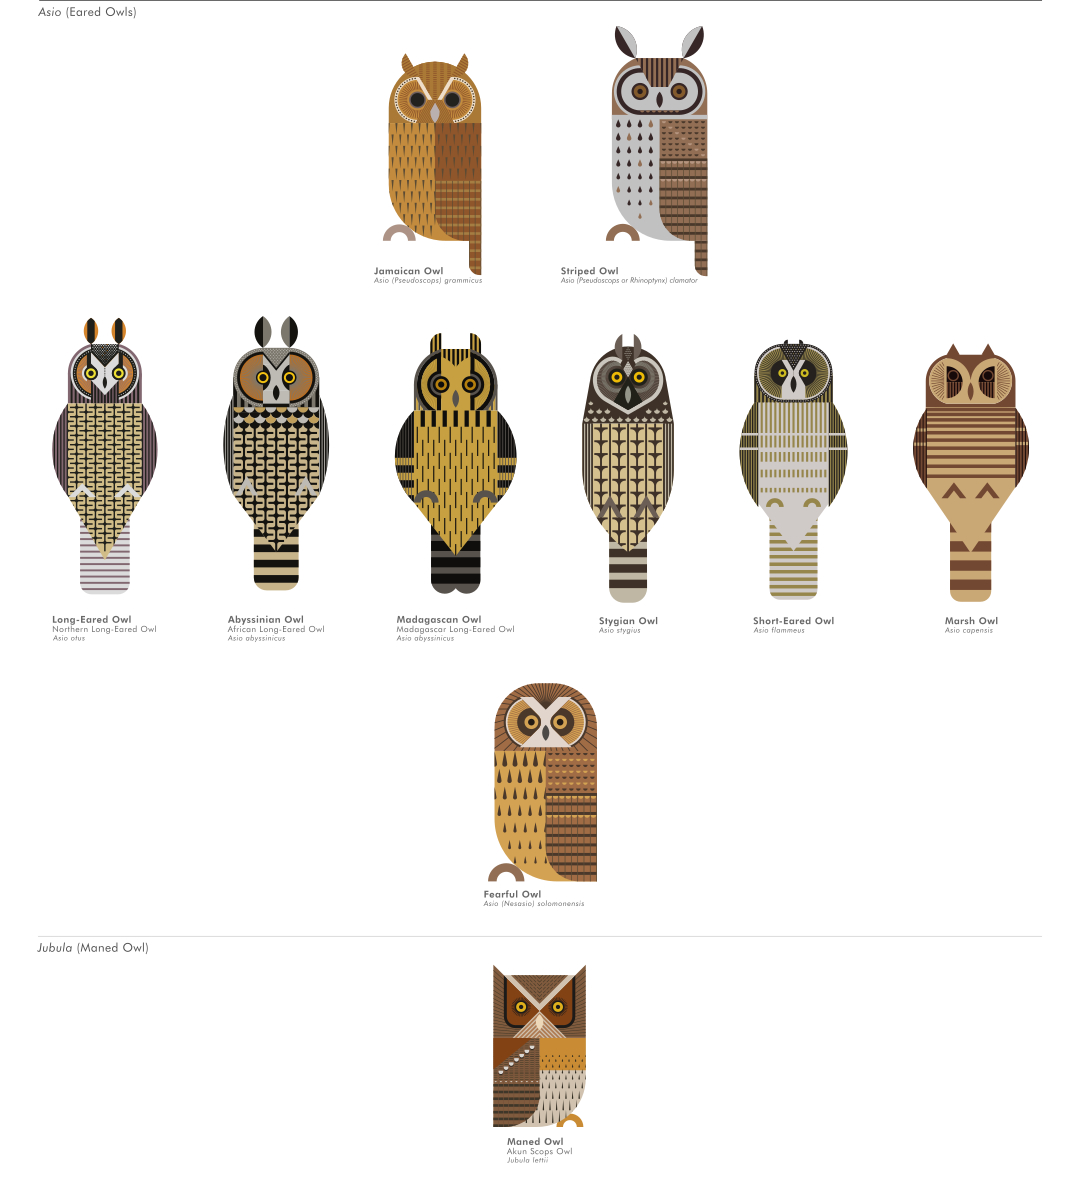 scott partridge - ave - avian vector encyclopedia - eared owls asio -  strigidae - strigiformes